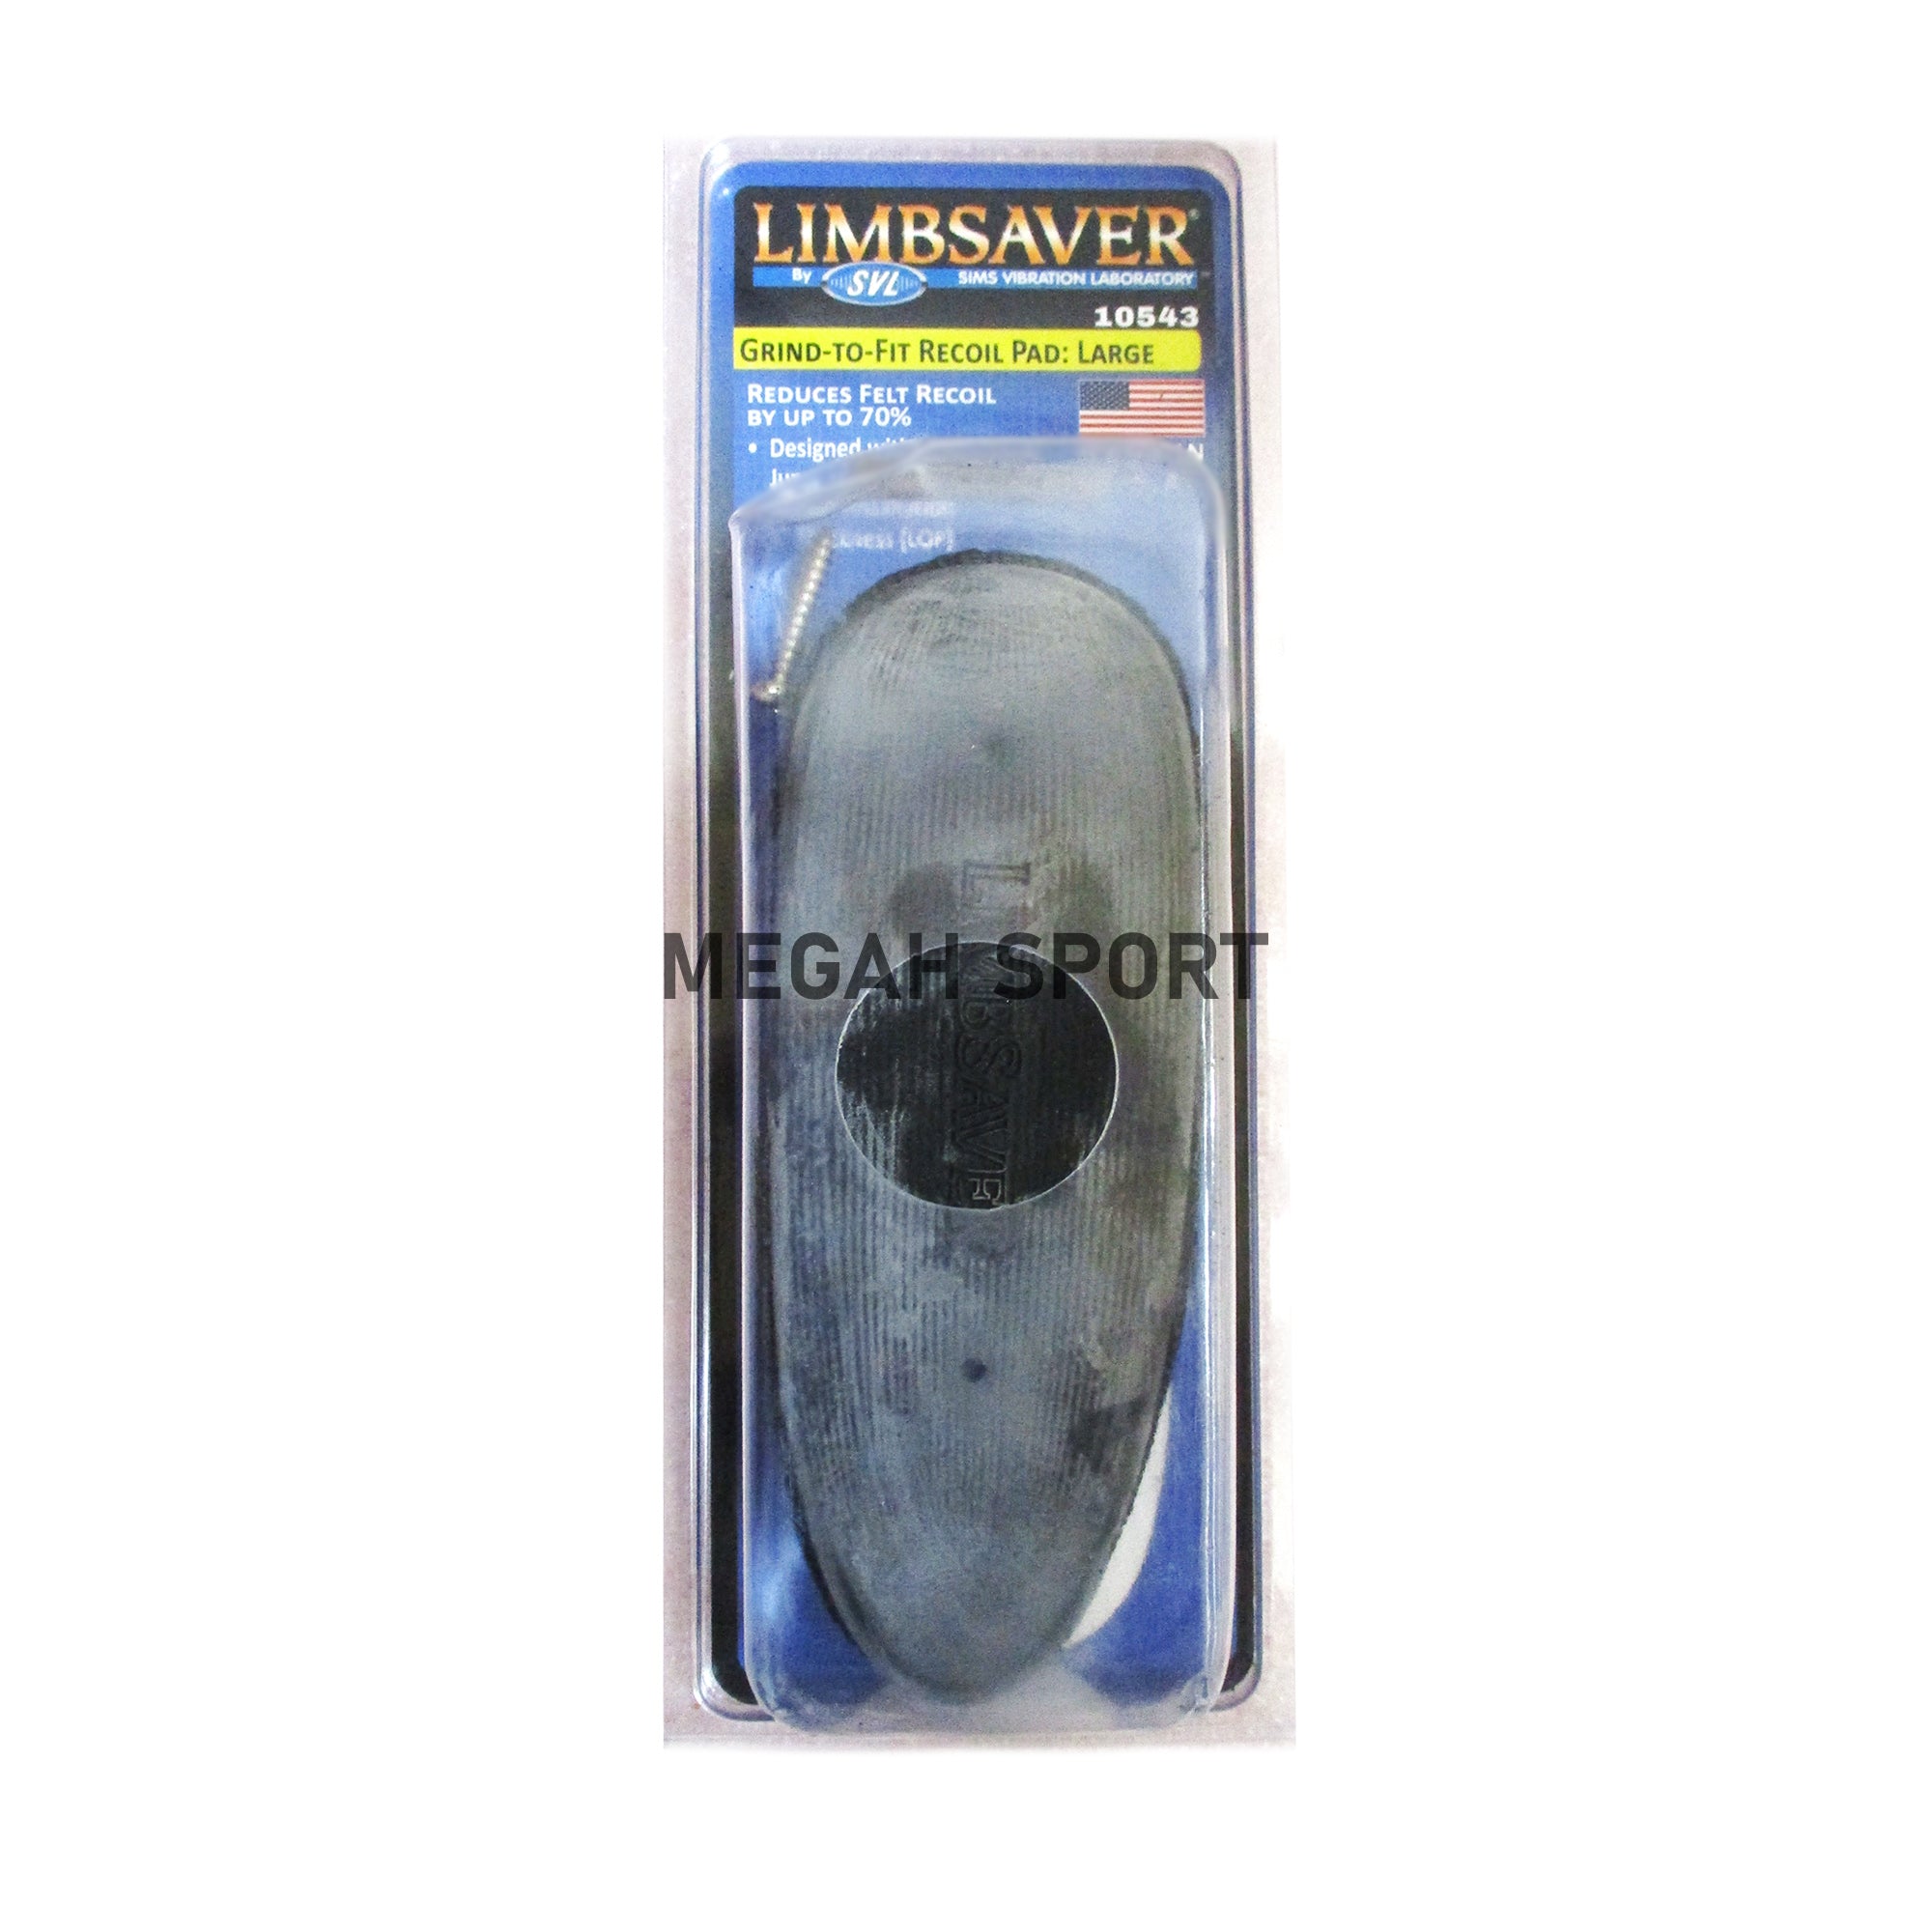 LIMBSAVER RECOIL PAD LARGE 10543 (AS615) - Megah Sport